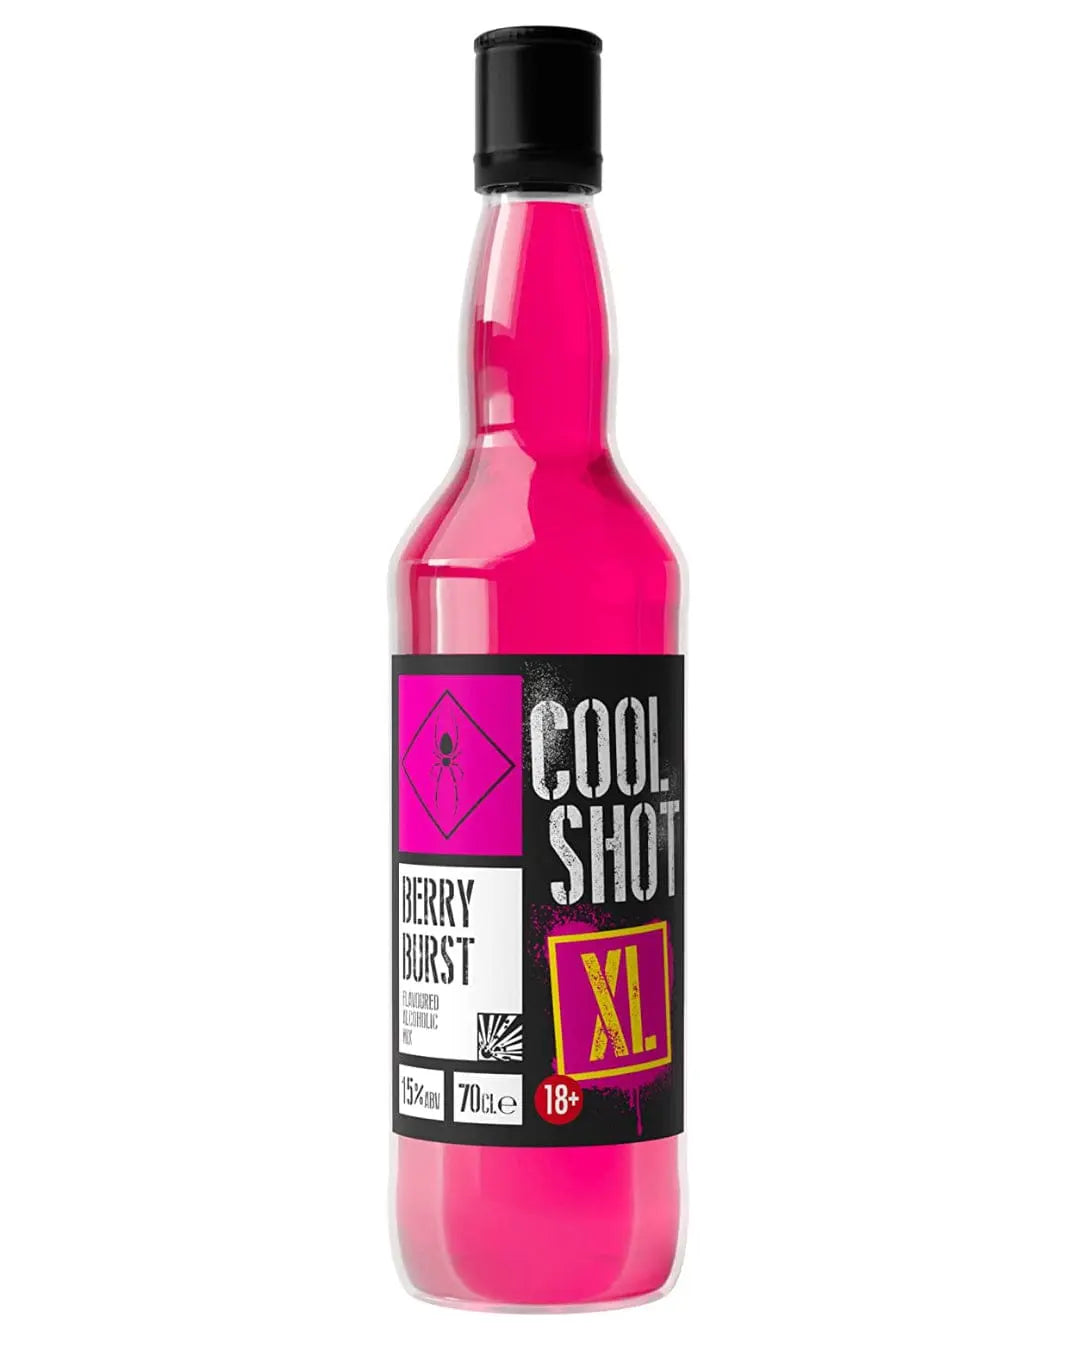 Cool Shot Berry Burst Vodka Shot XL, 70 cl Vodka